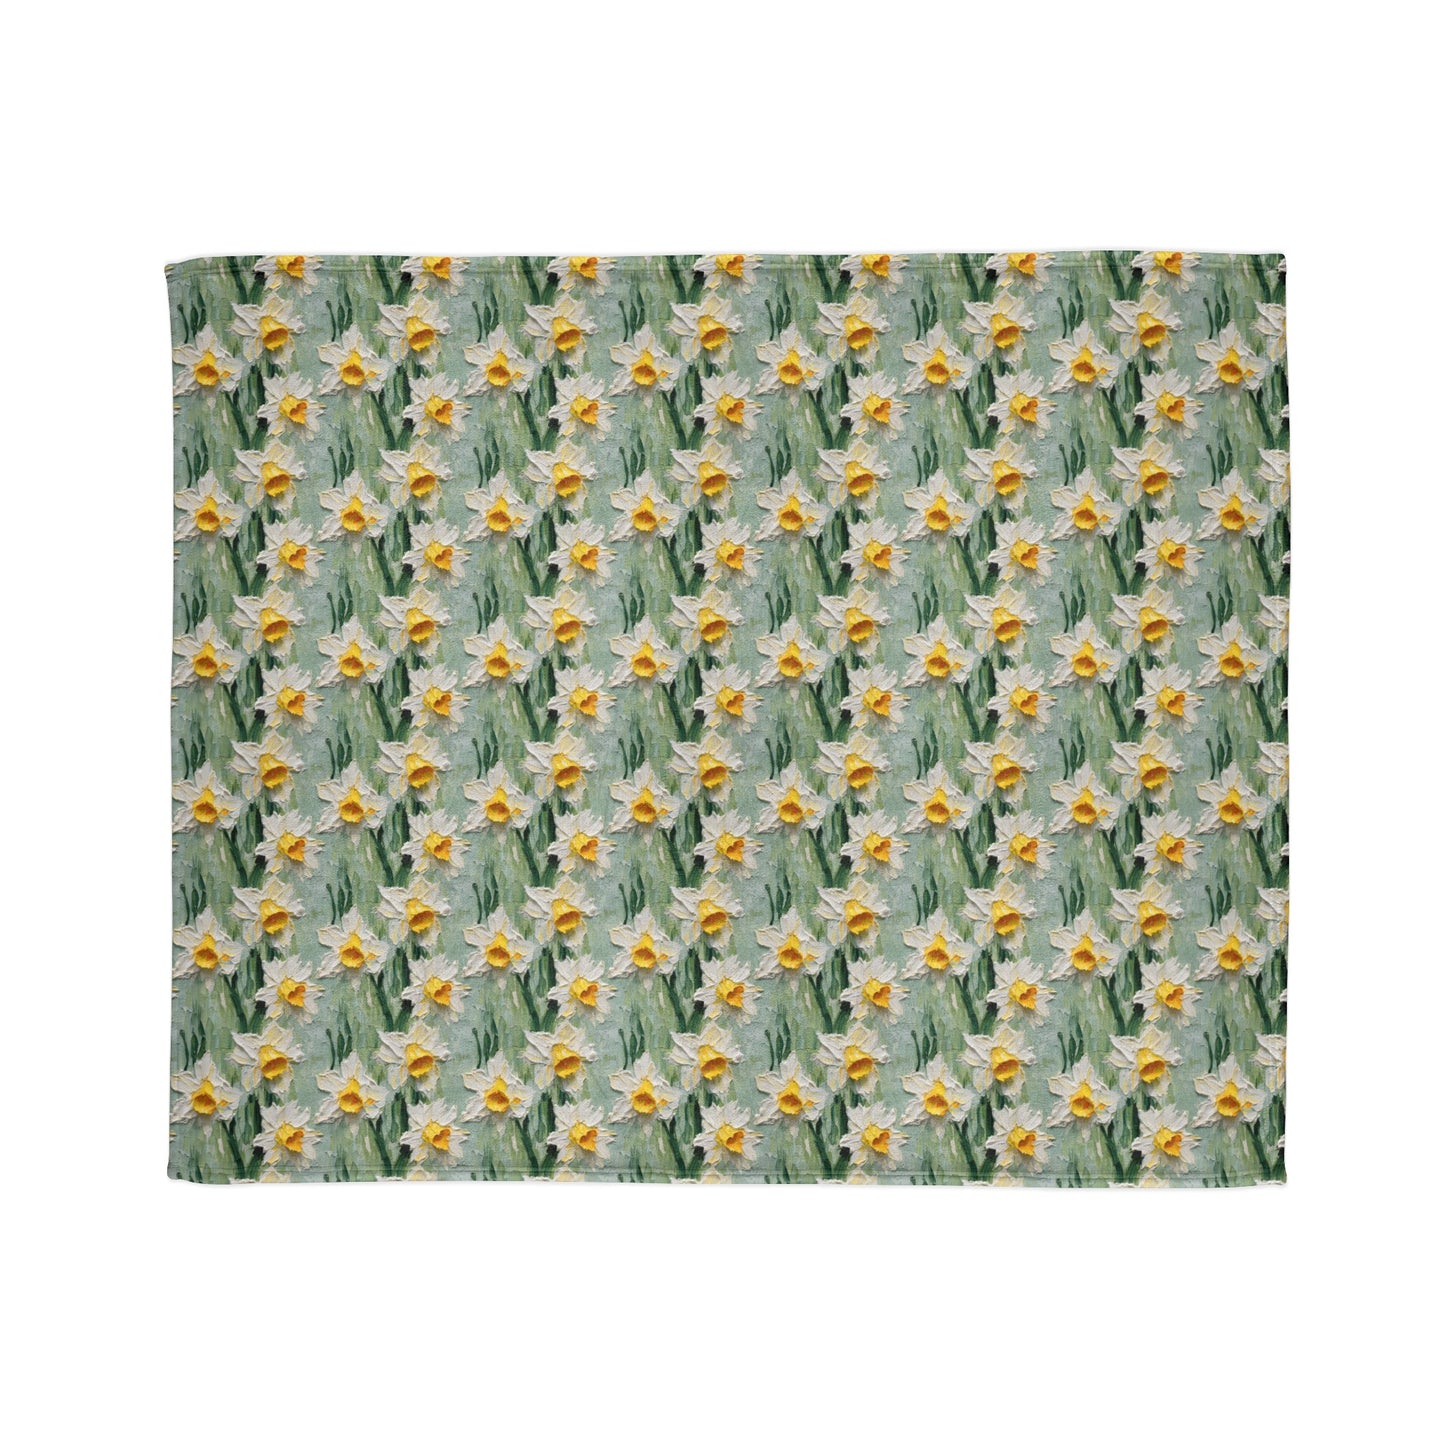 Daffodil Layers - Throws